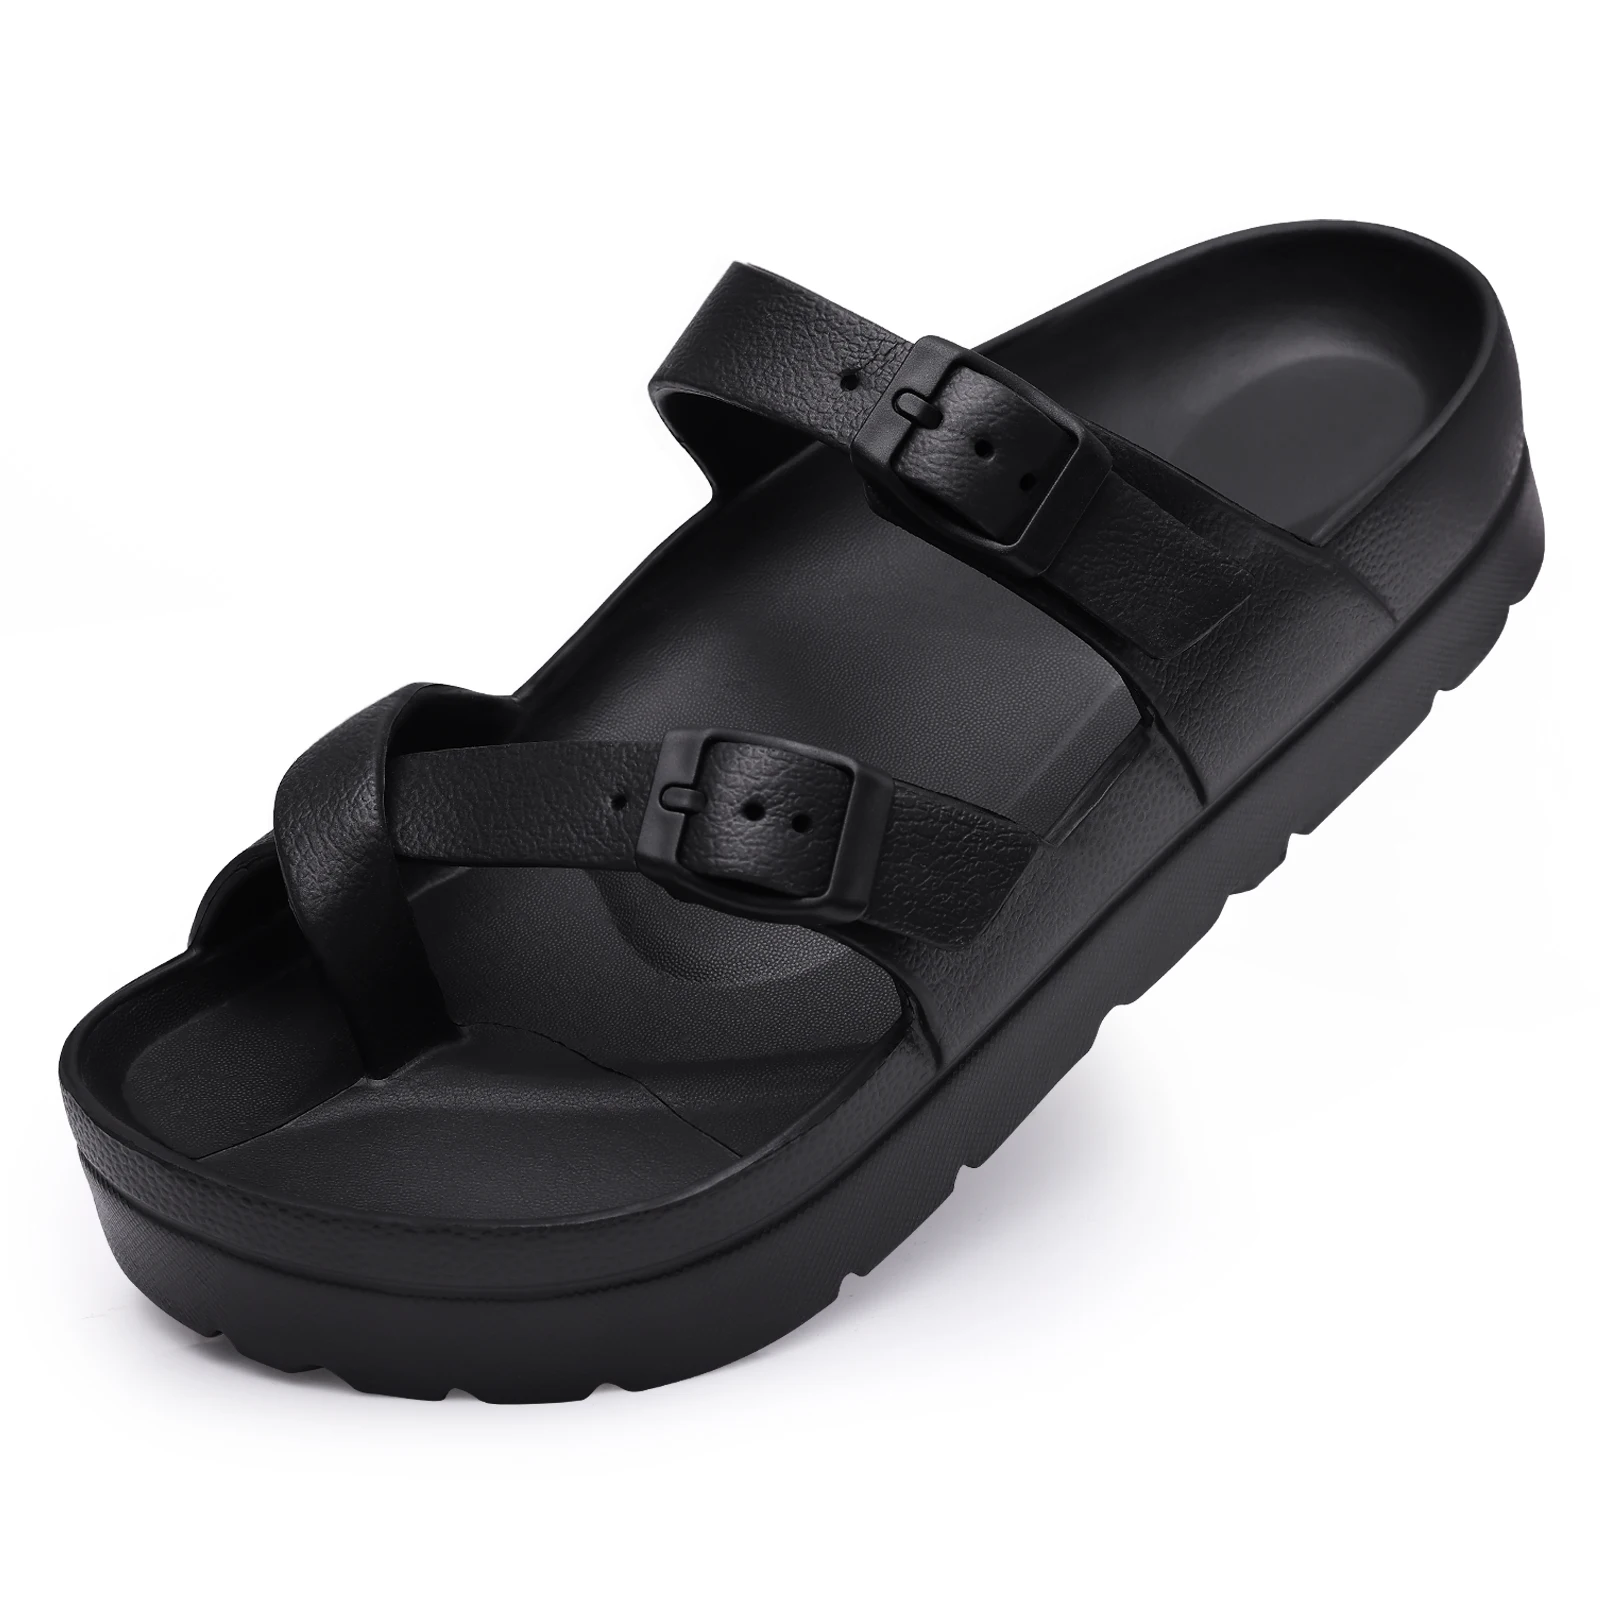 

Litfun Fashion Women's Clogs Sandals Platform Flip-flops Women Outdoor Beach Slippers with Arch Support EVA Insole Home Shoes